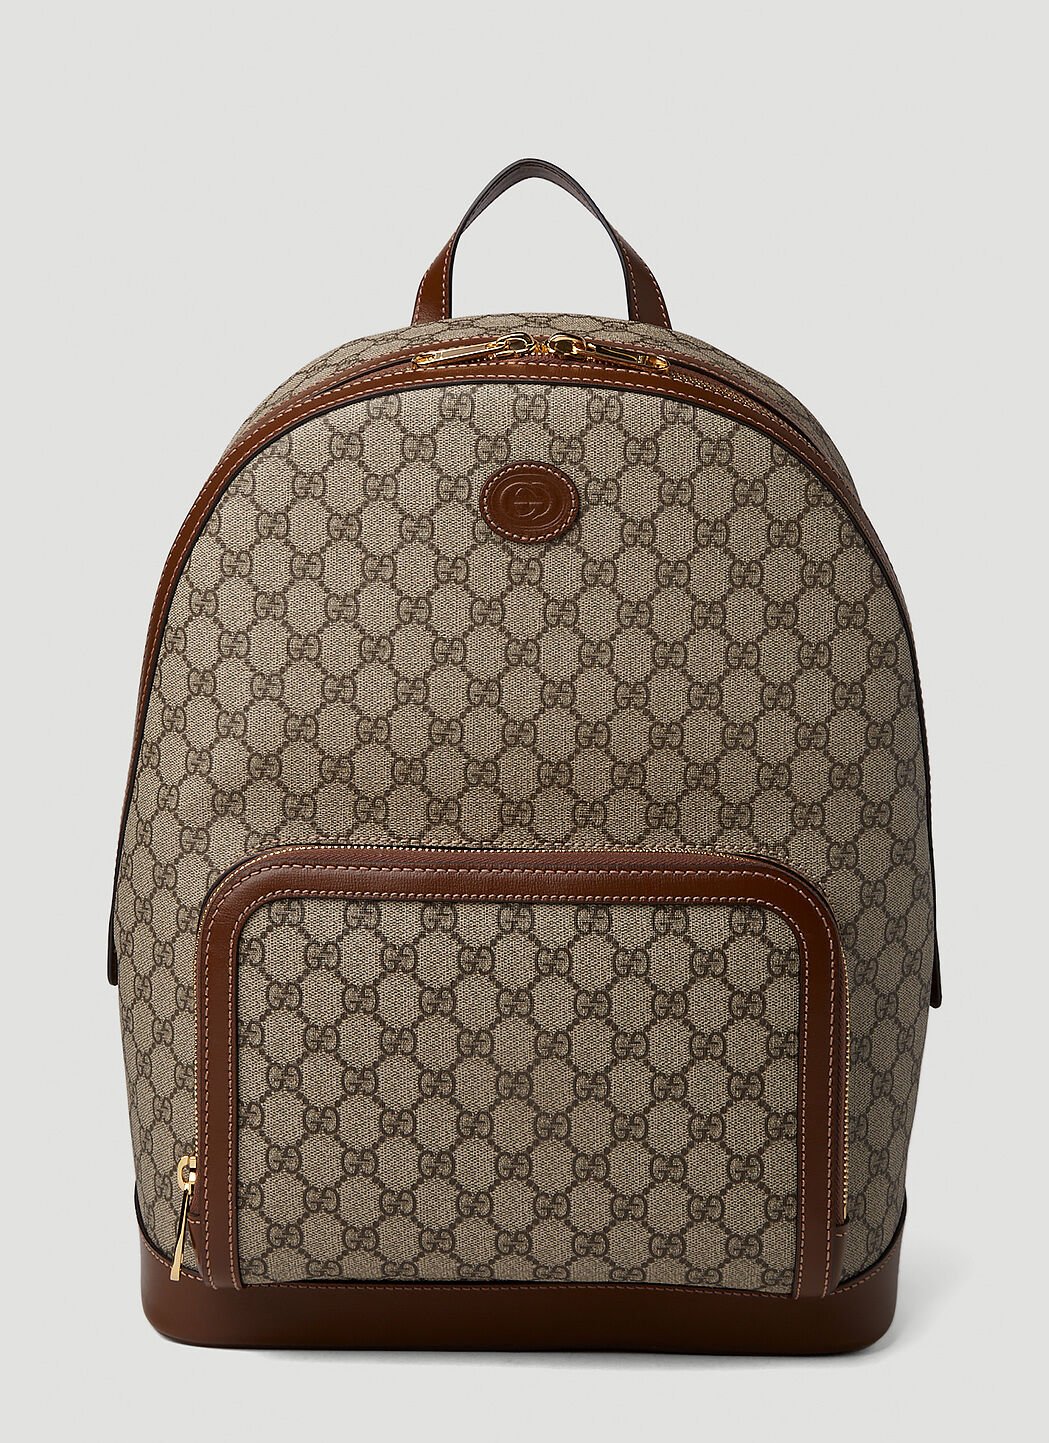 Gucci GG Retro Backpack Beige guc0147157